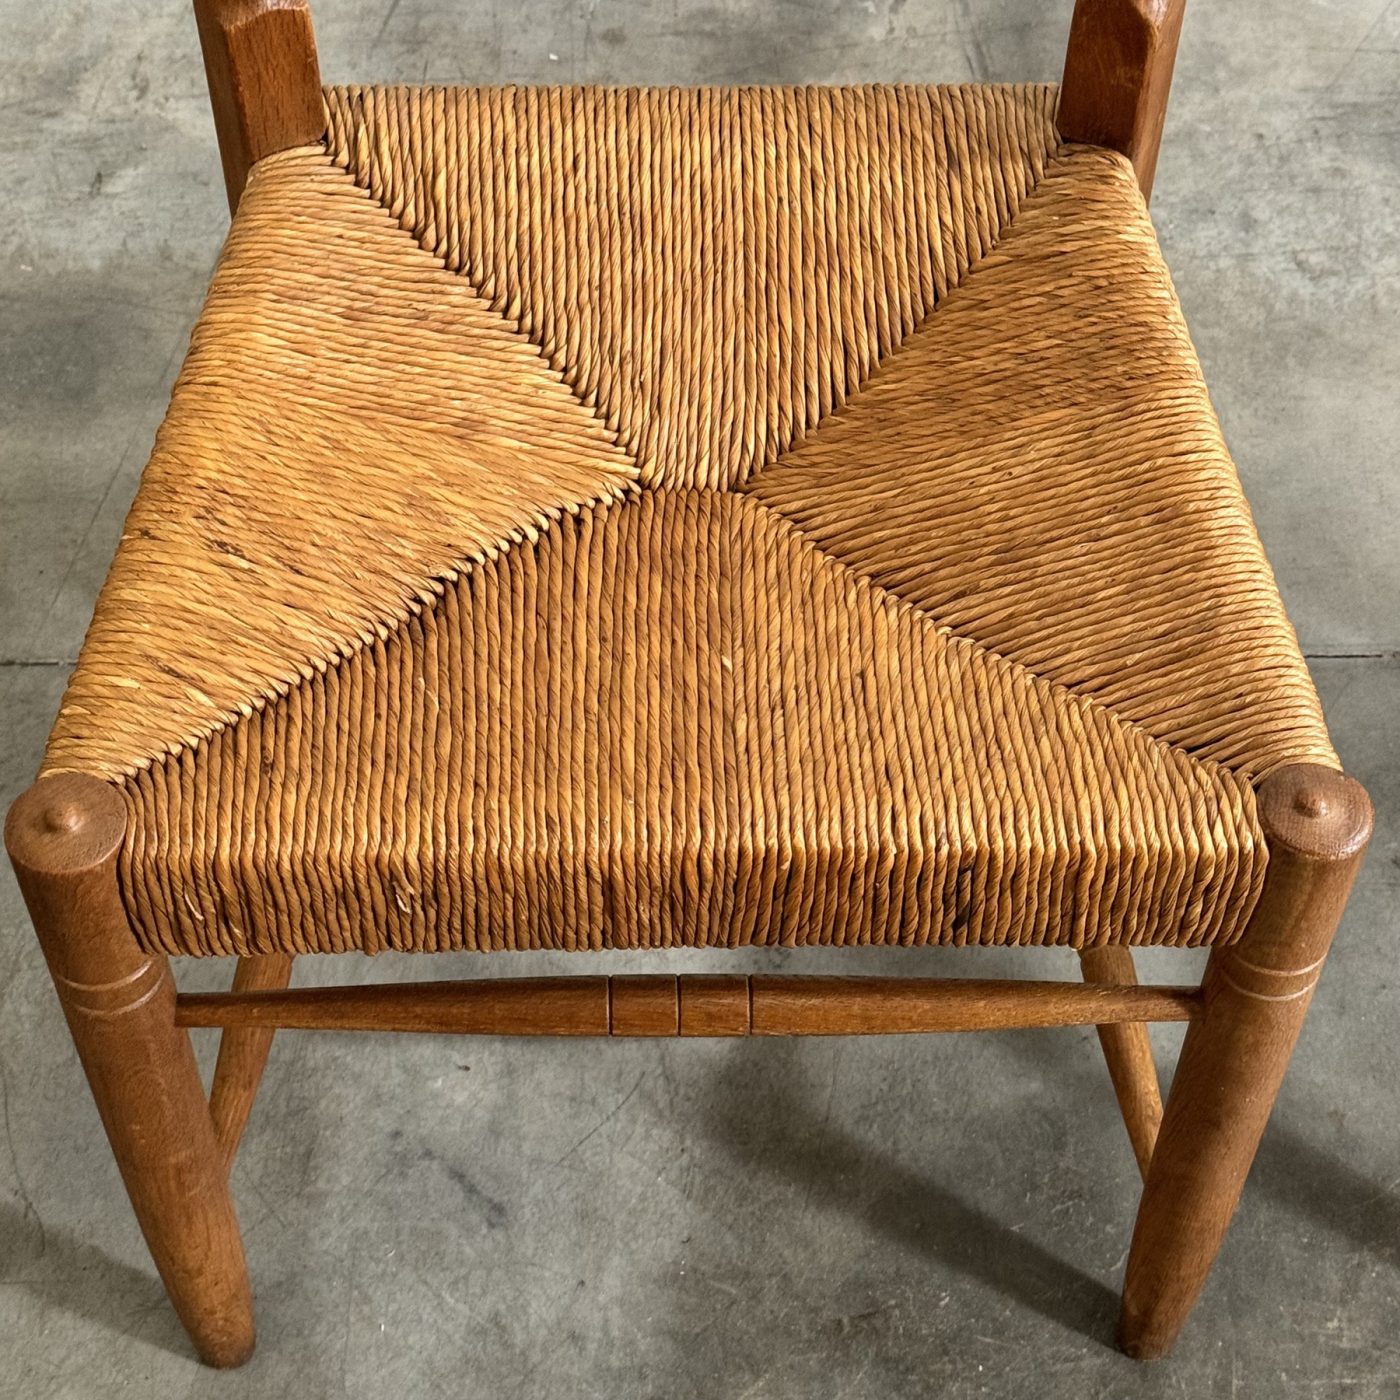 objet-vagabond-rustic-chairs0006